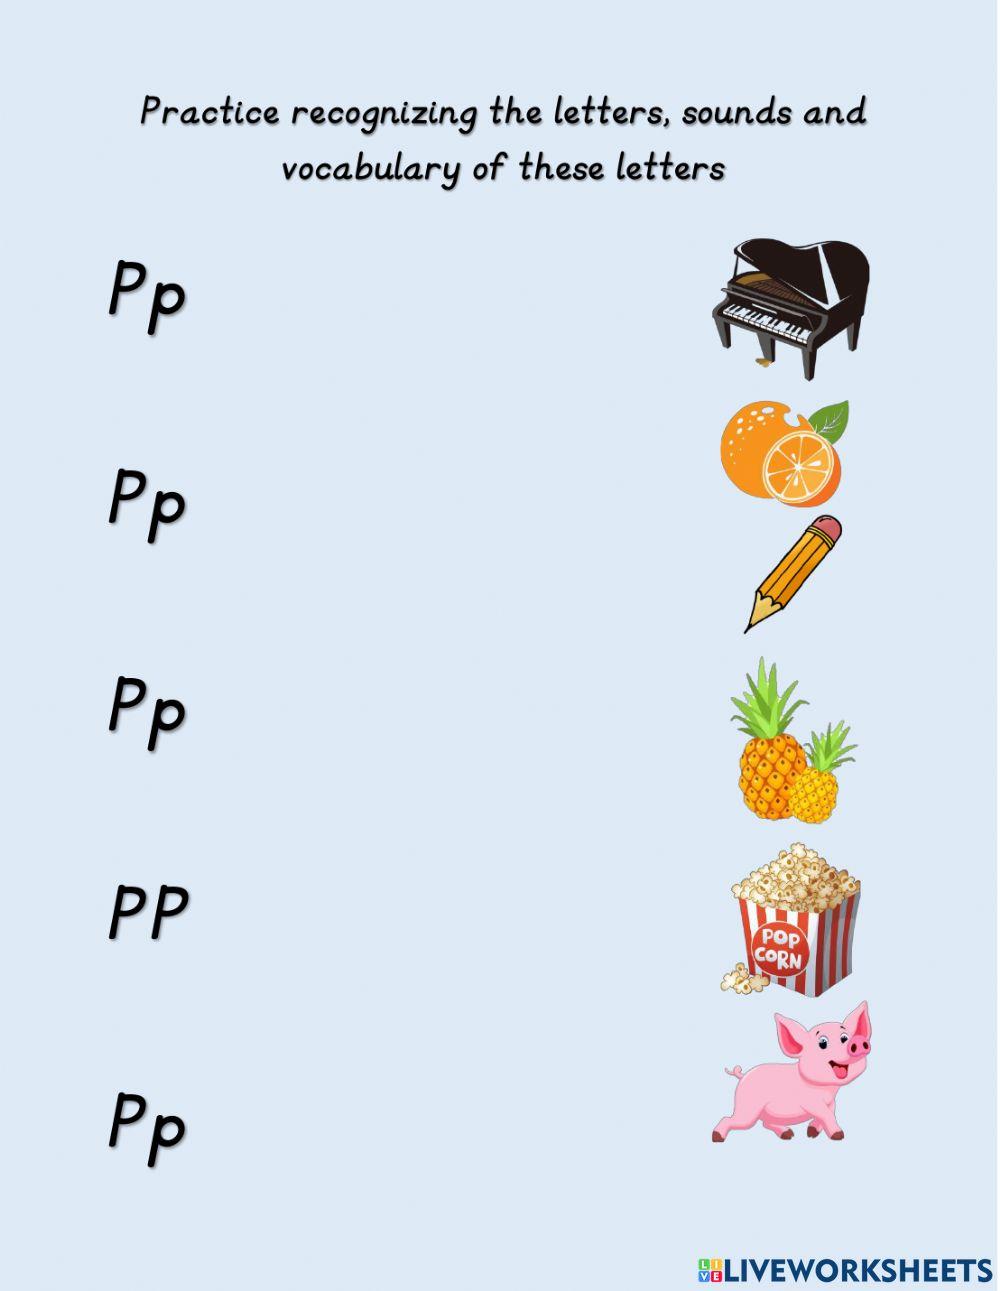 Letter Pp vocabulary